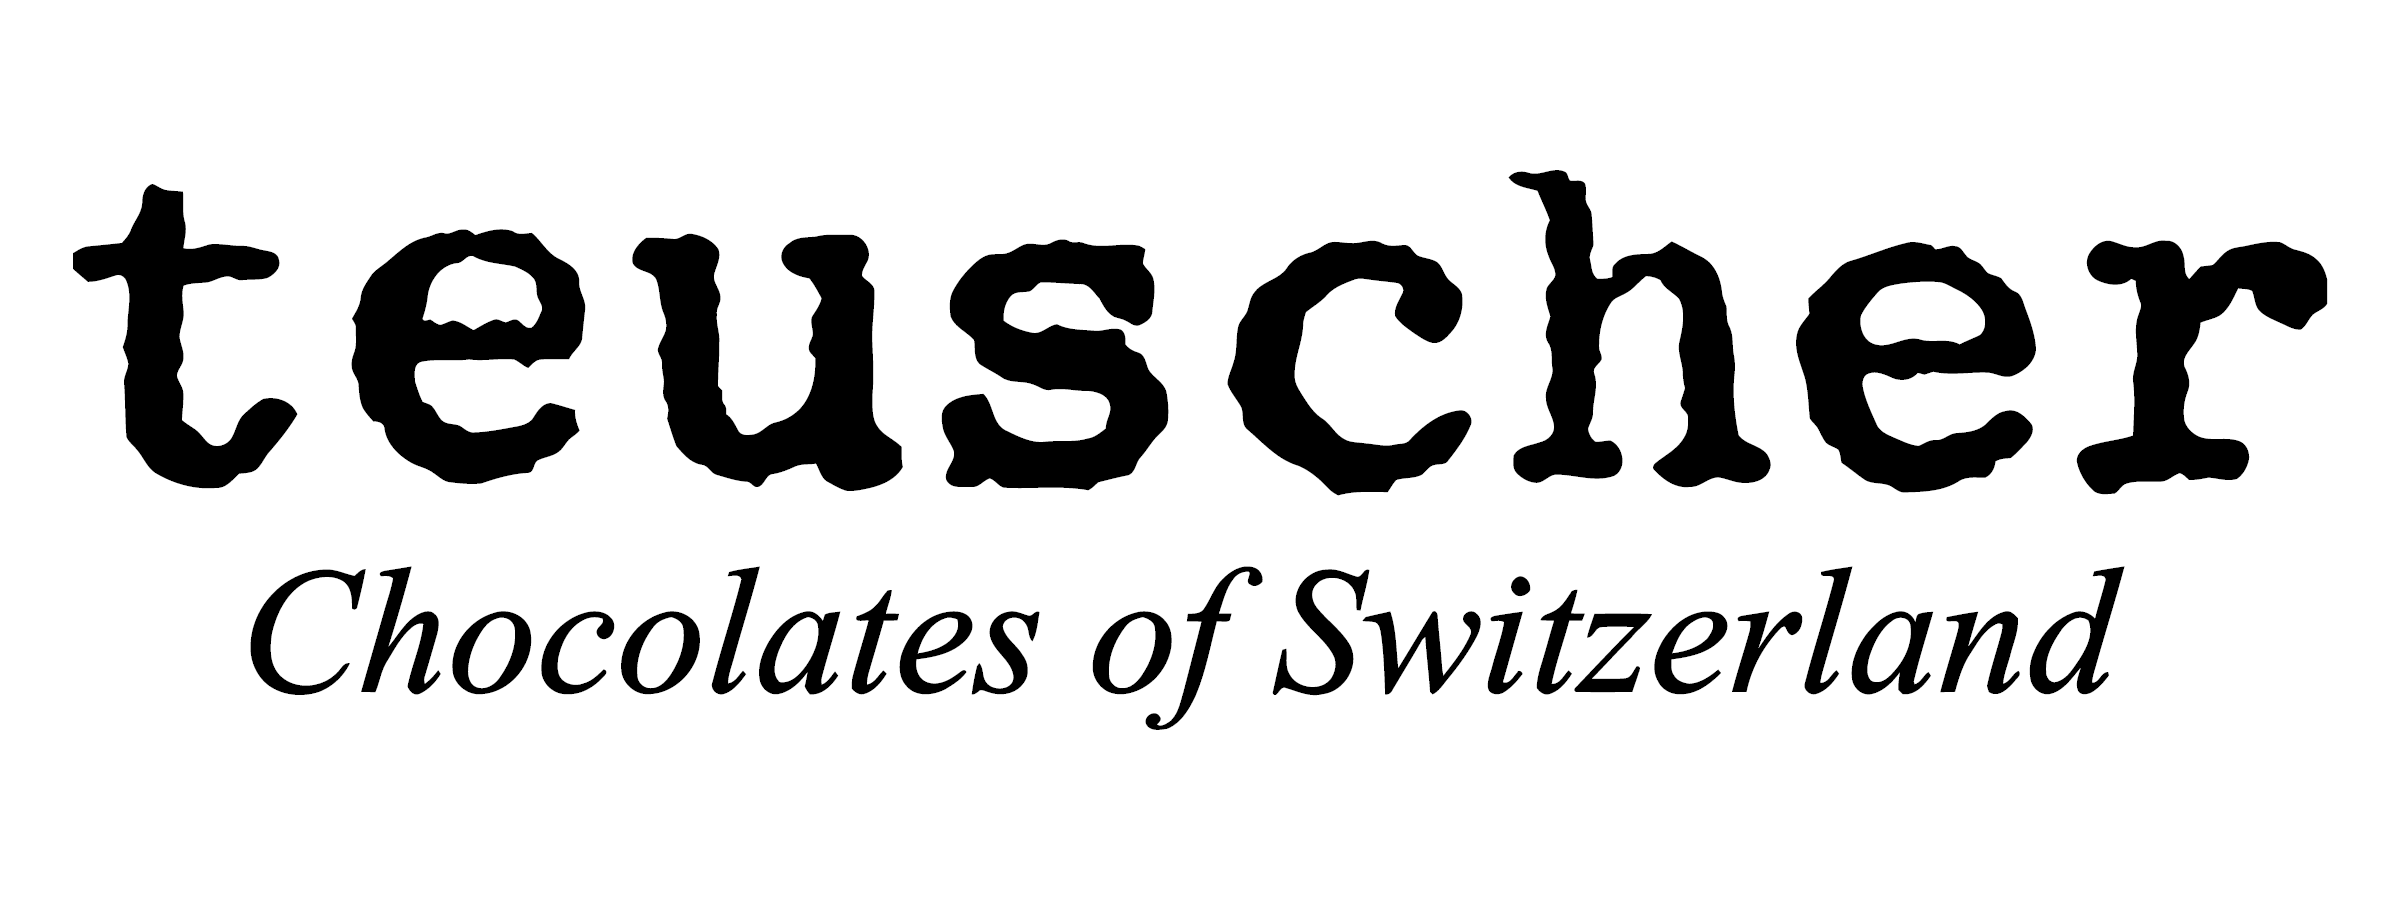 https://wisslaxboys.teamsnapsites.com/wp-content/uploads/sites/3407/2022/09/Teuscher_Logo_Switz.png